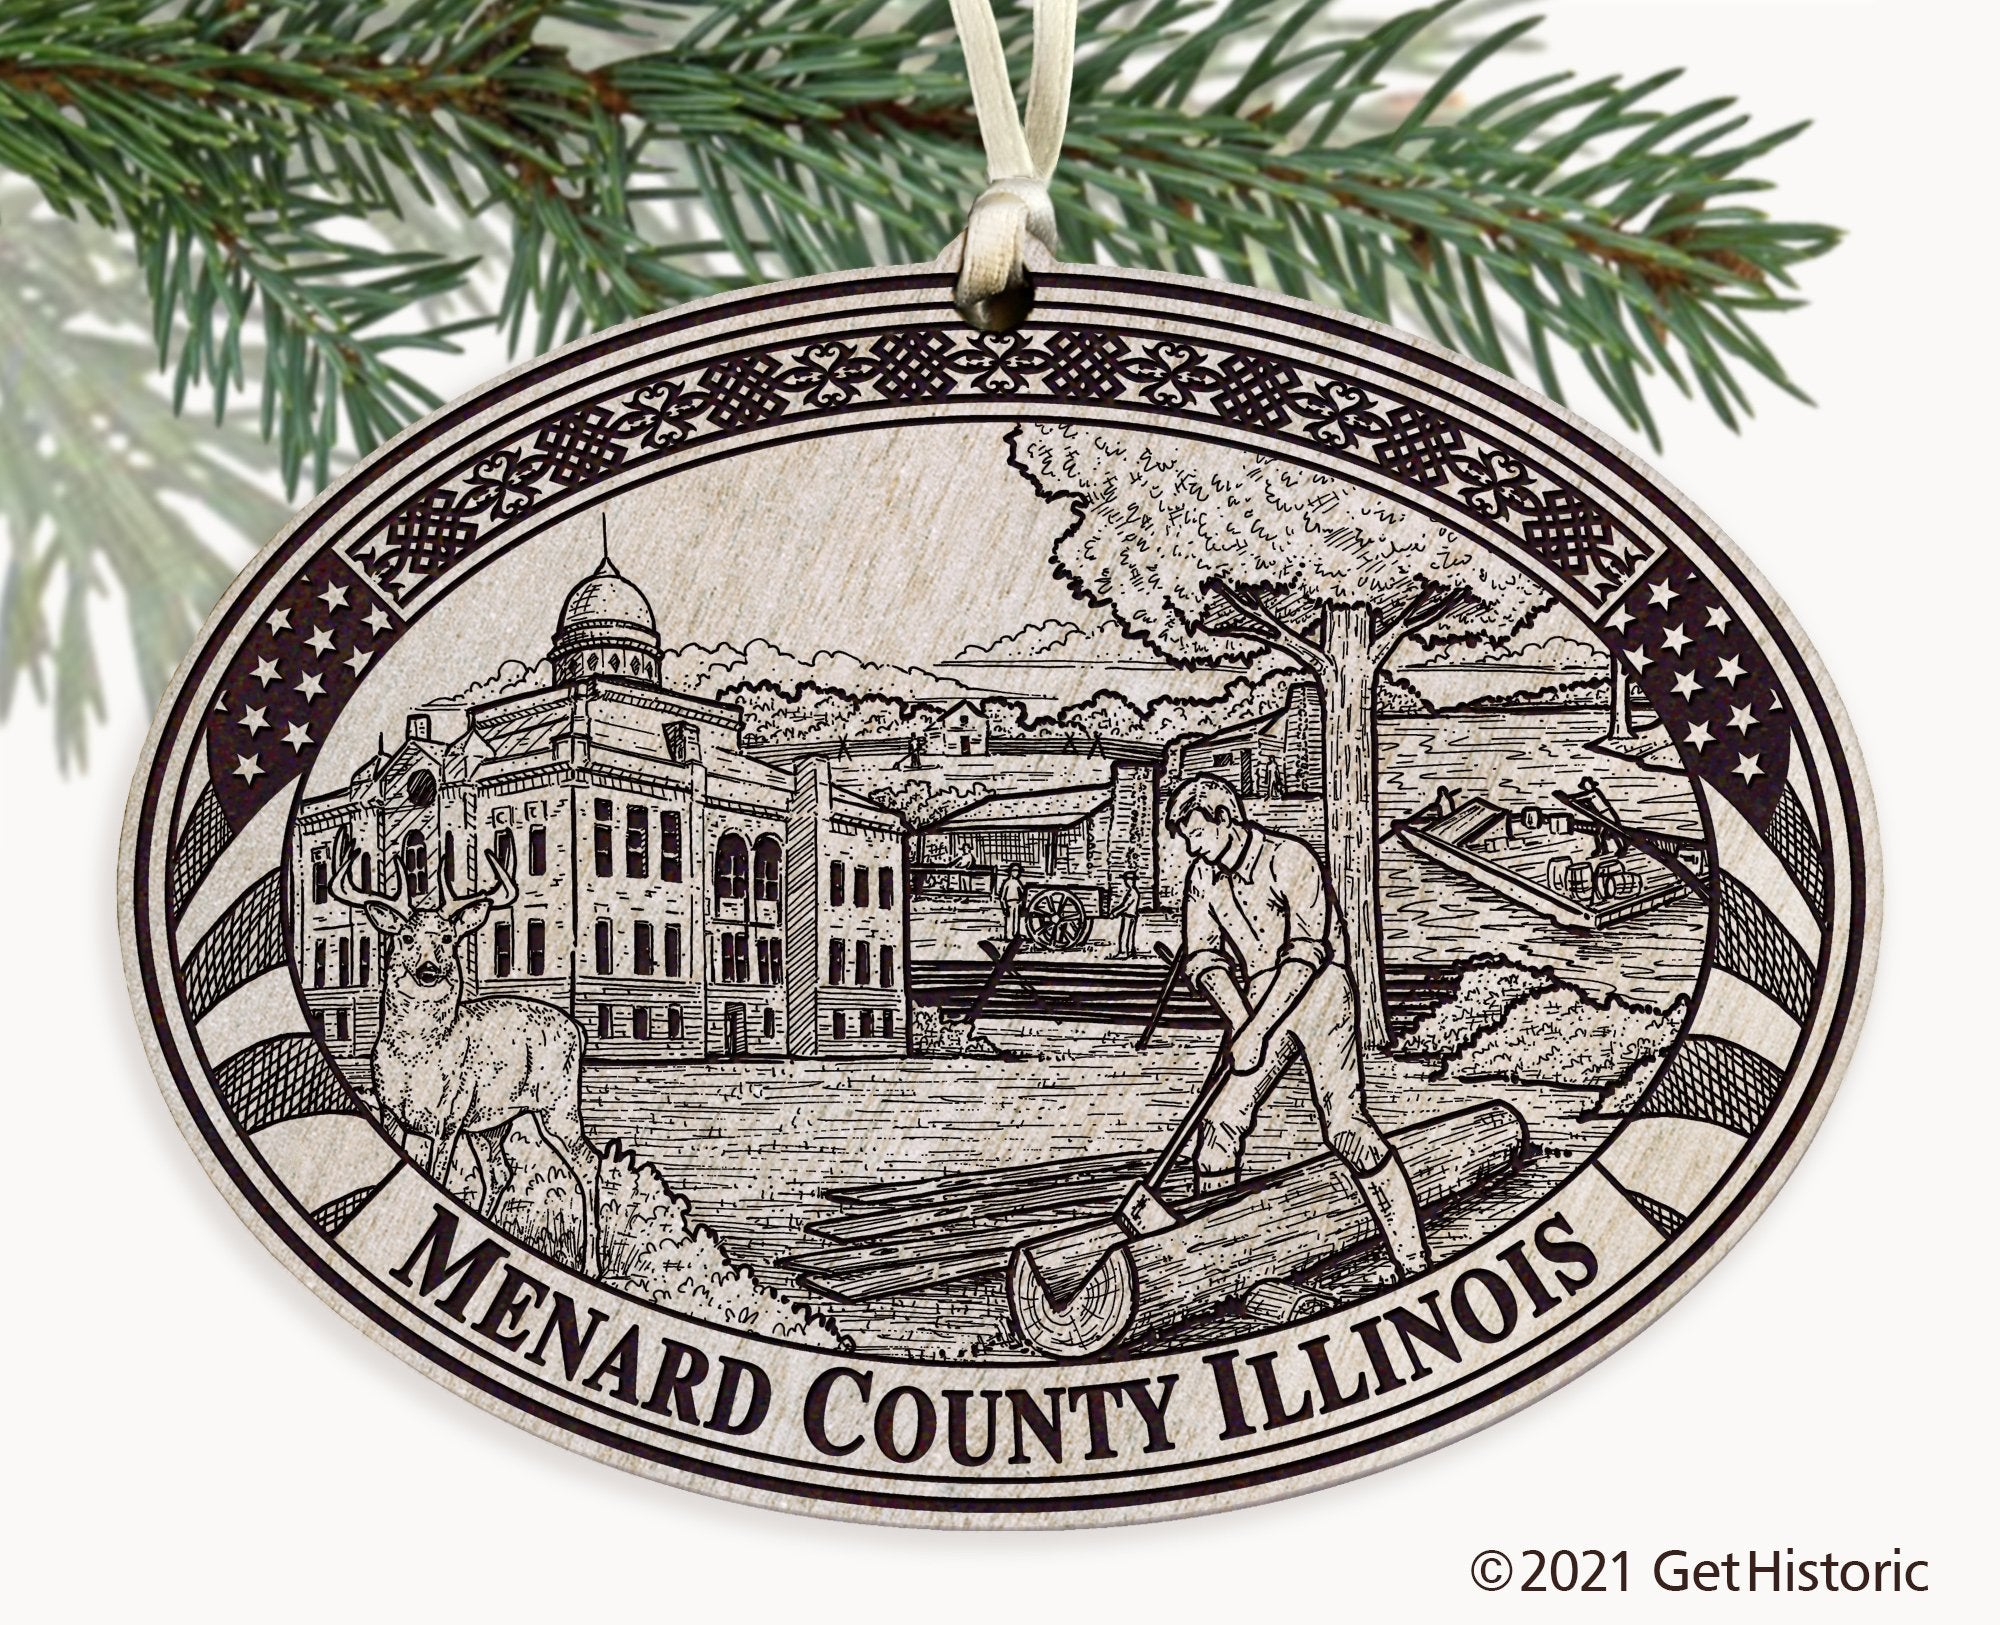 Menard County Illinois Engraved Ornament